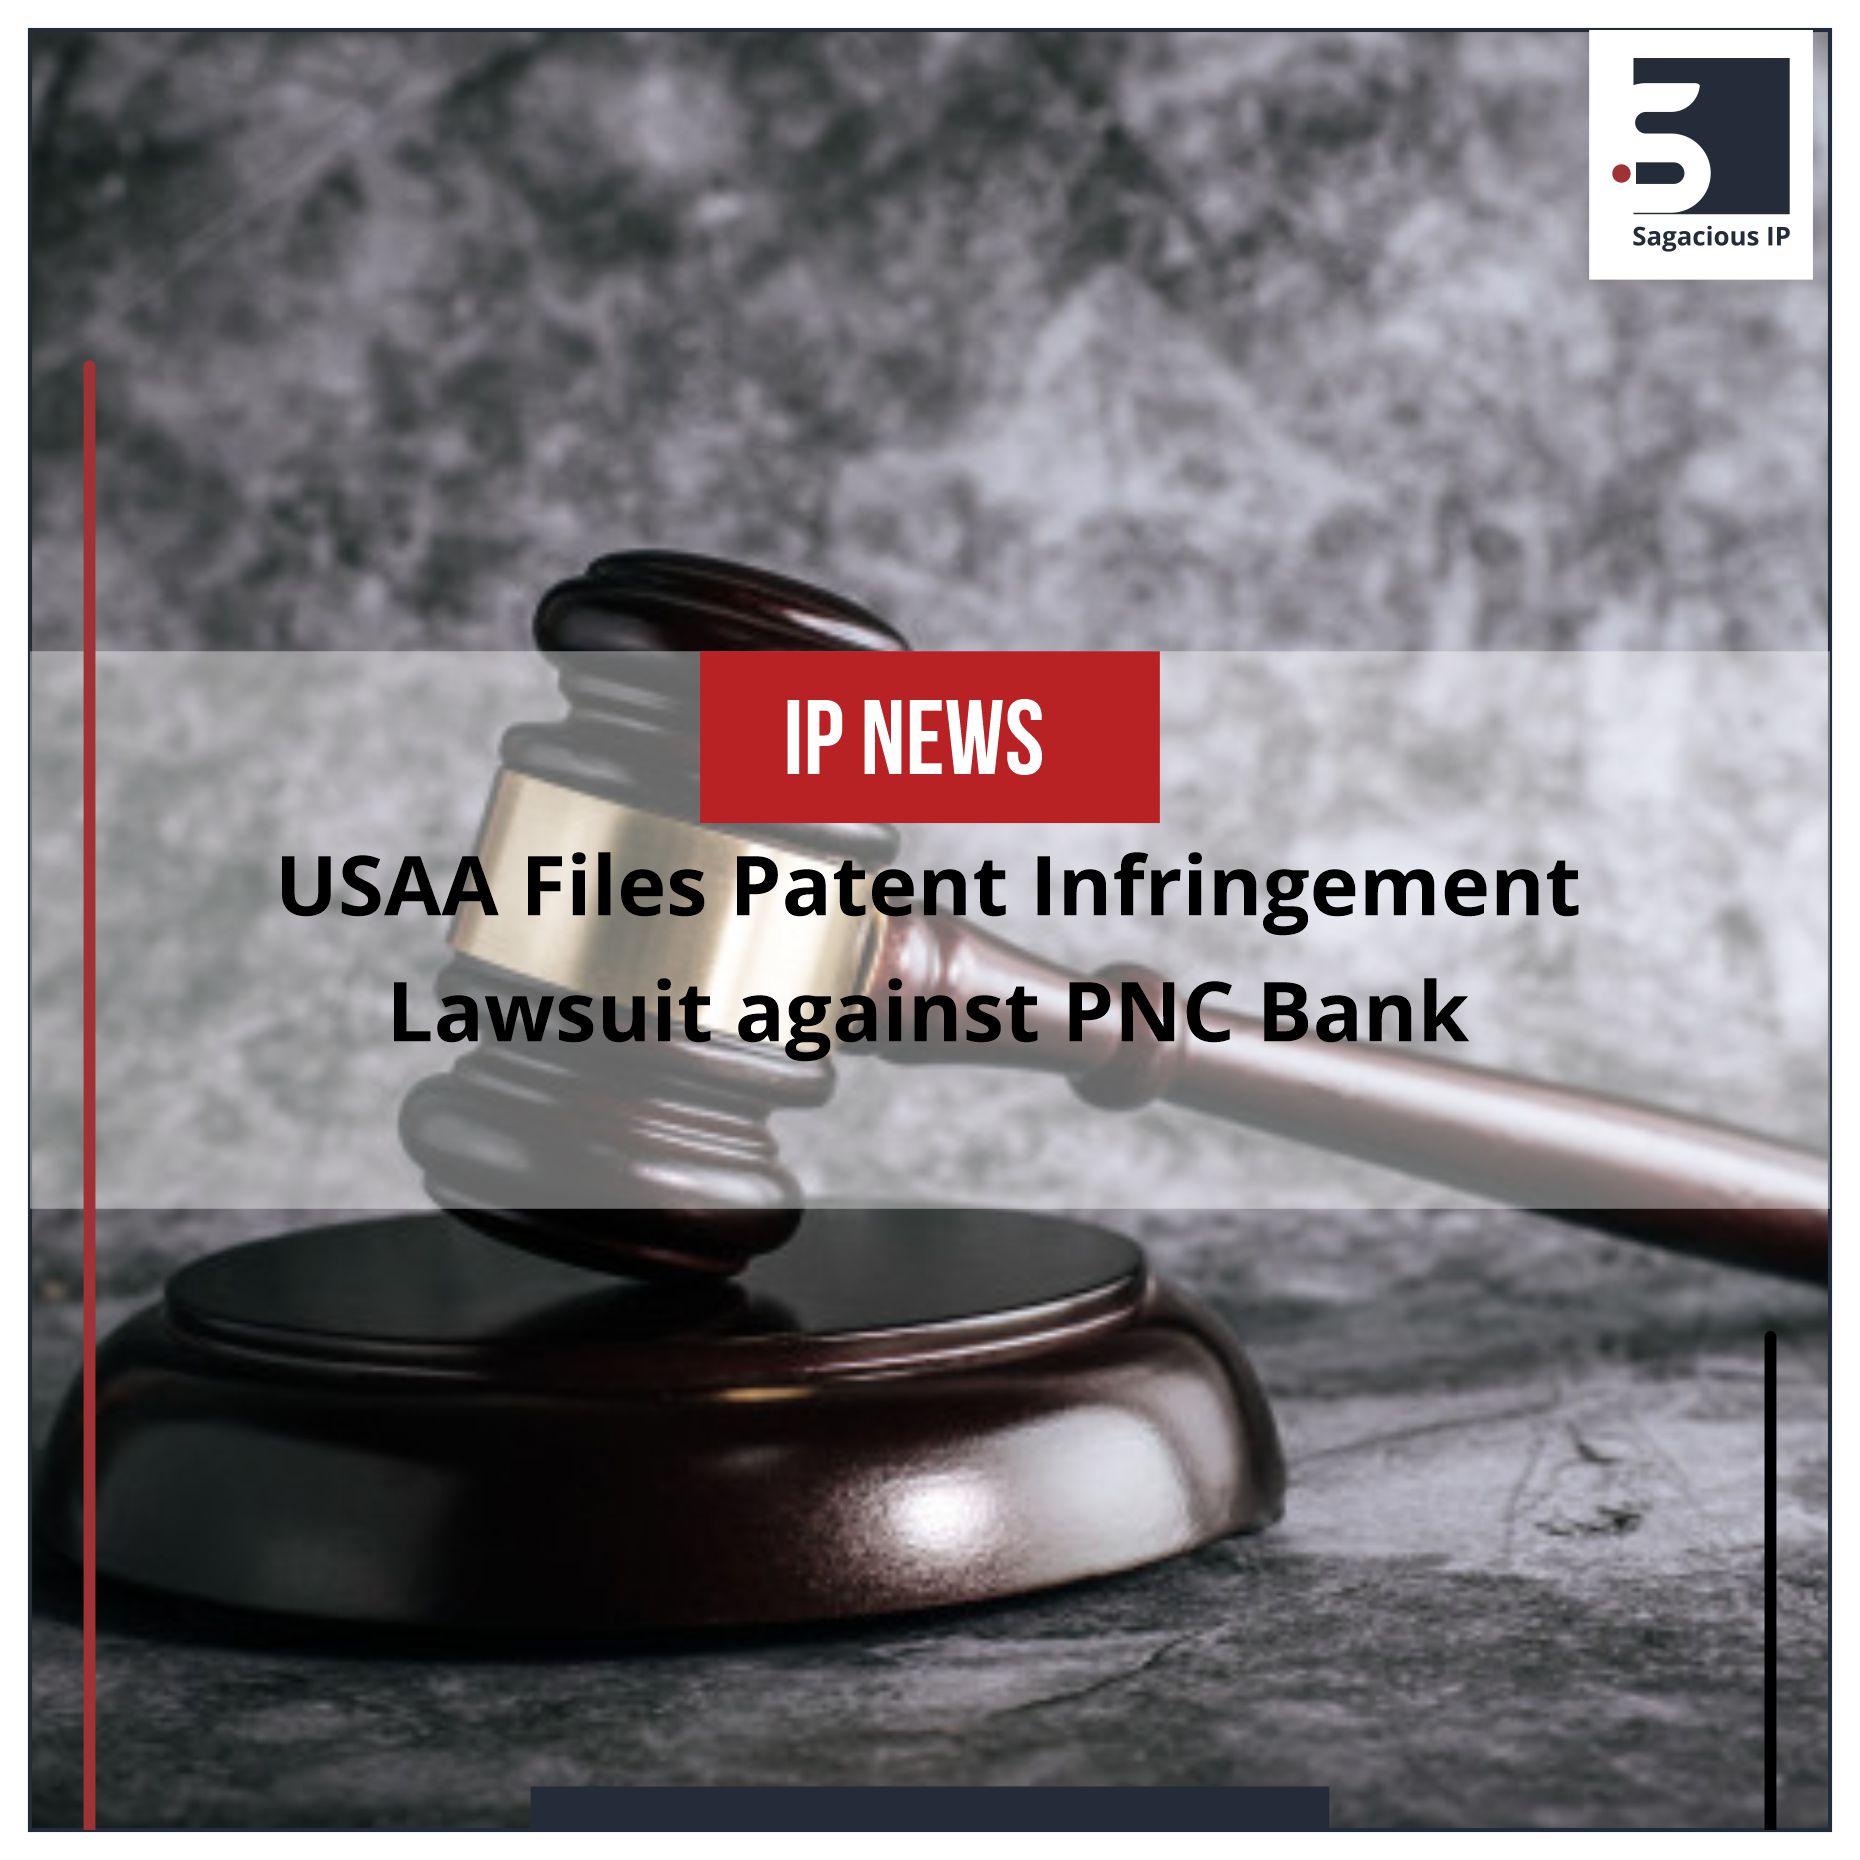 USAA Files Patent Infringement Lawsuit against PNC Bank IP News Shots